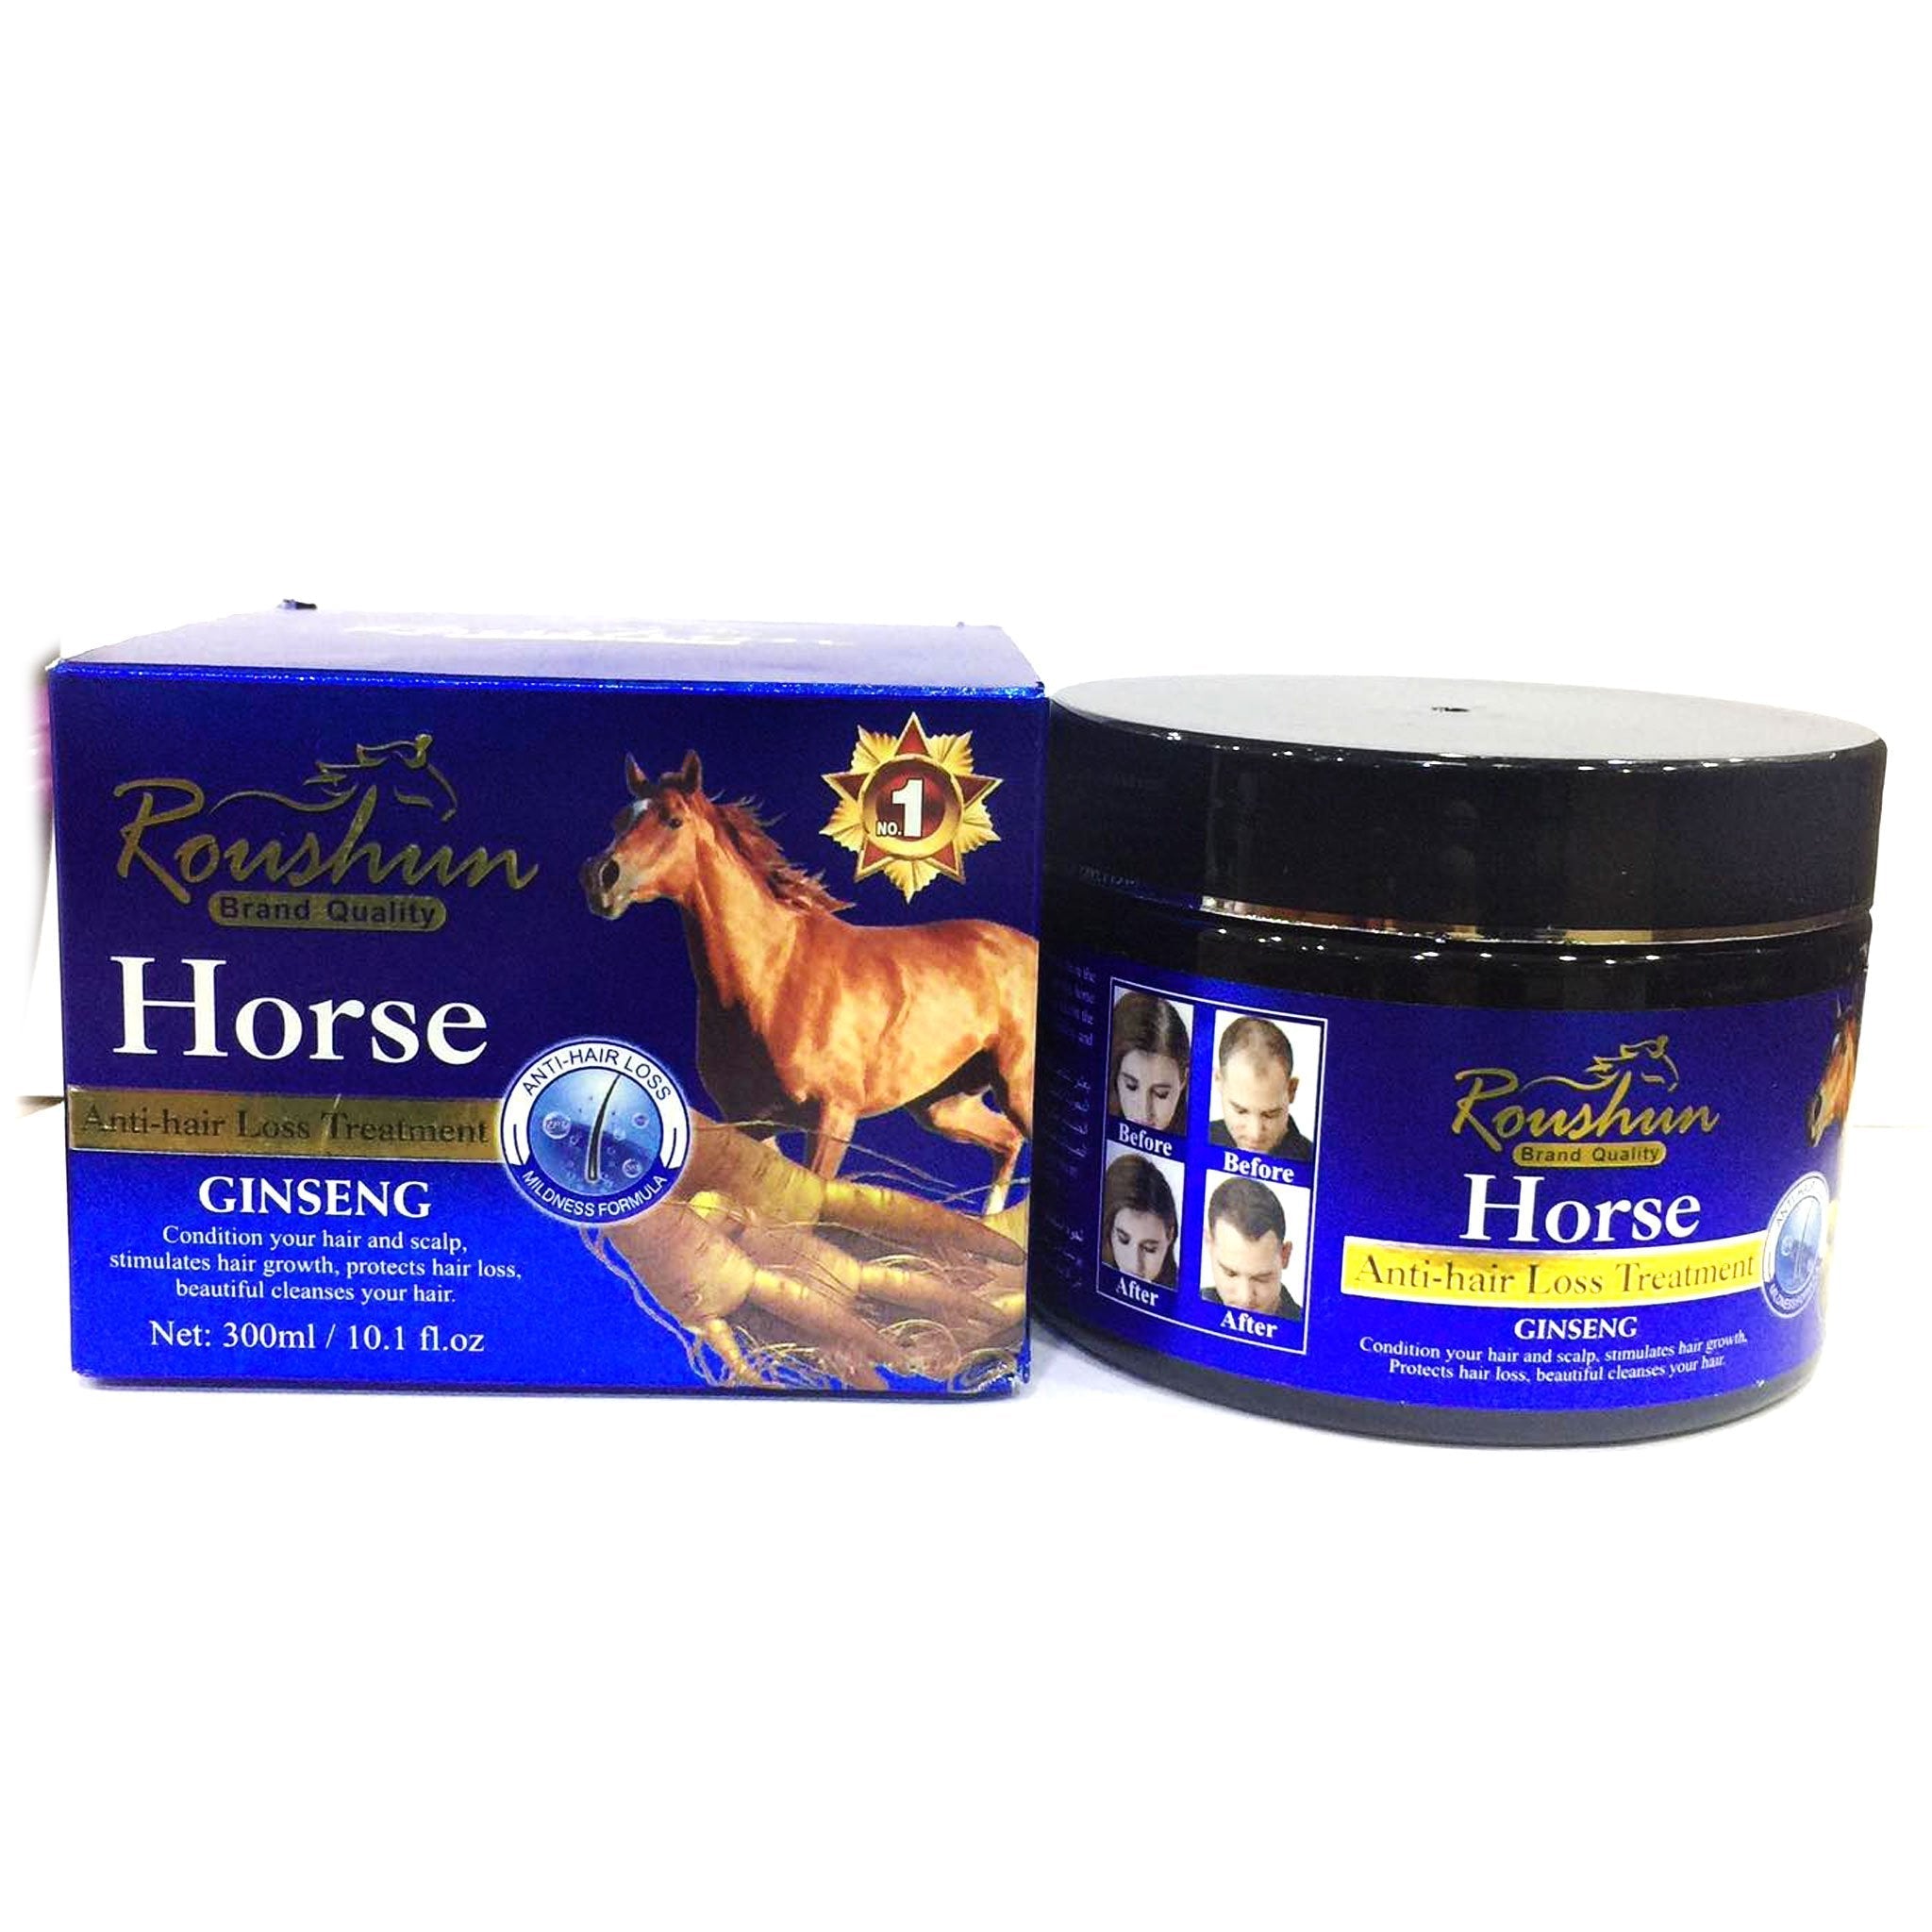 Roushun Brand Quality Horse Antihairloss Treatment Ginseng 300ml